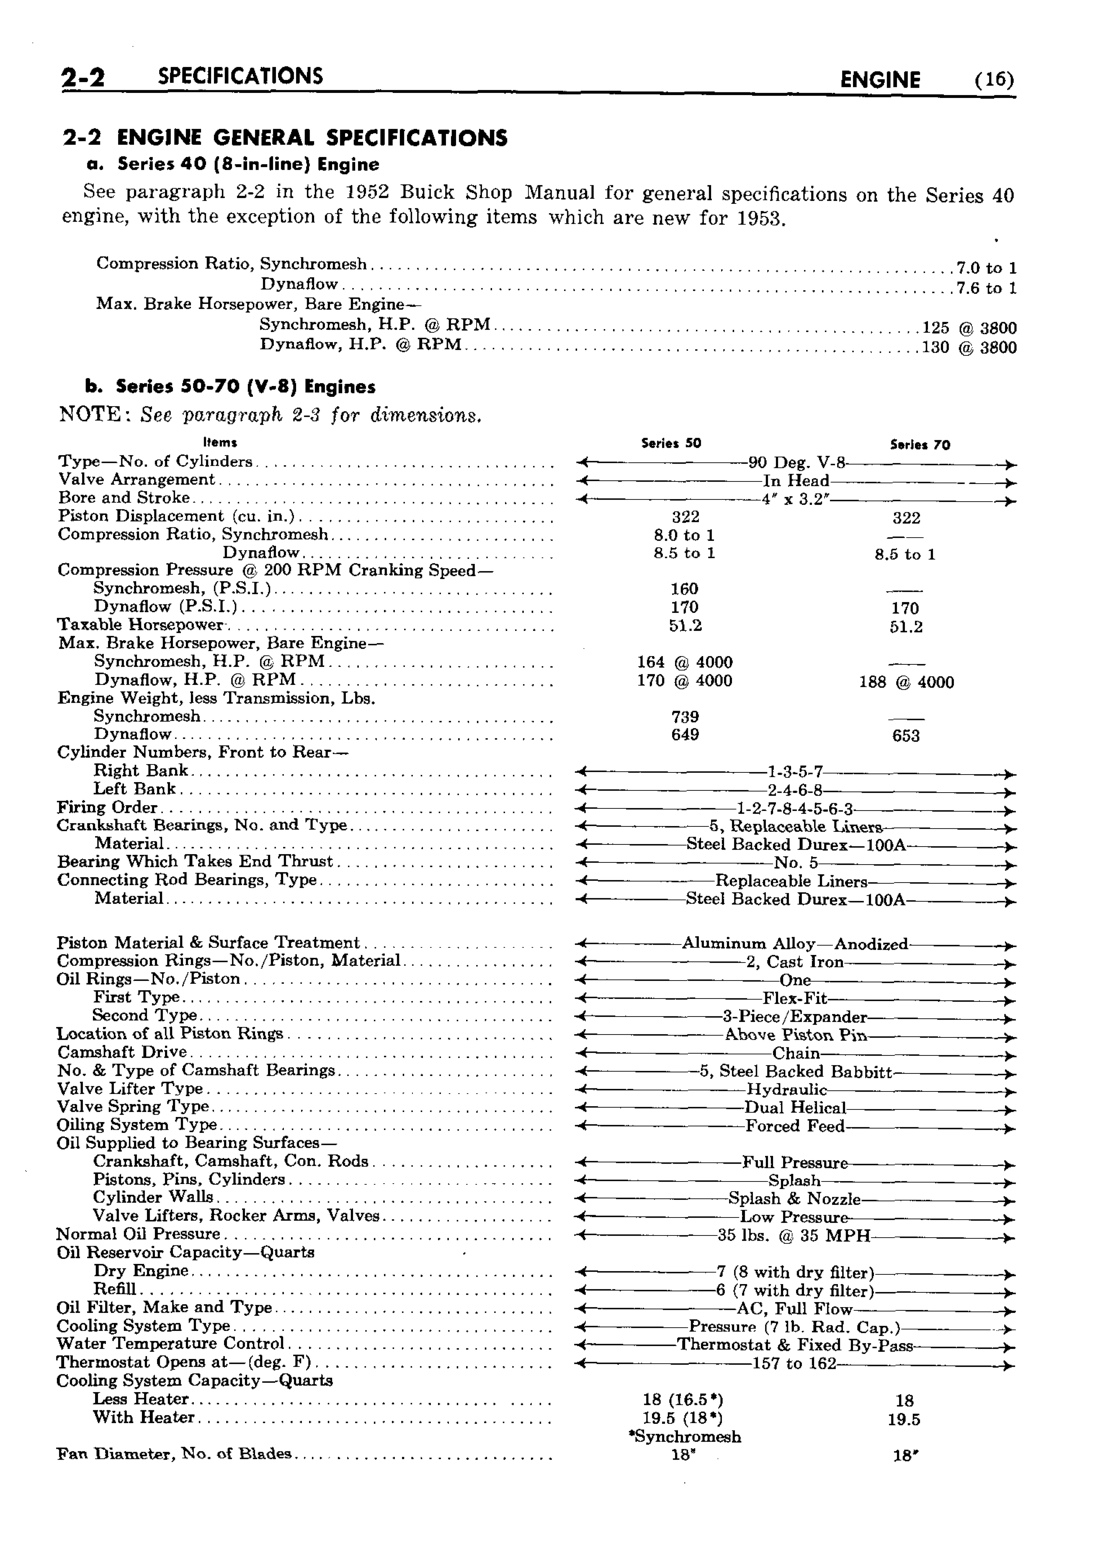 n_03 1953 Buick Shop Manual - Engine-002-002.jpg